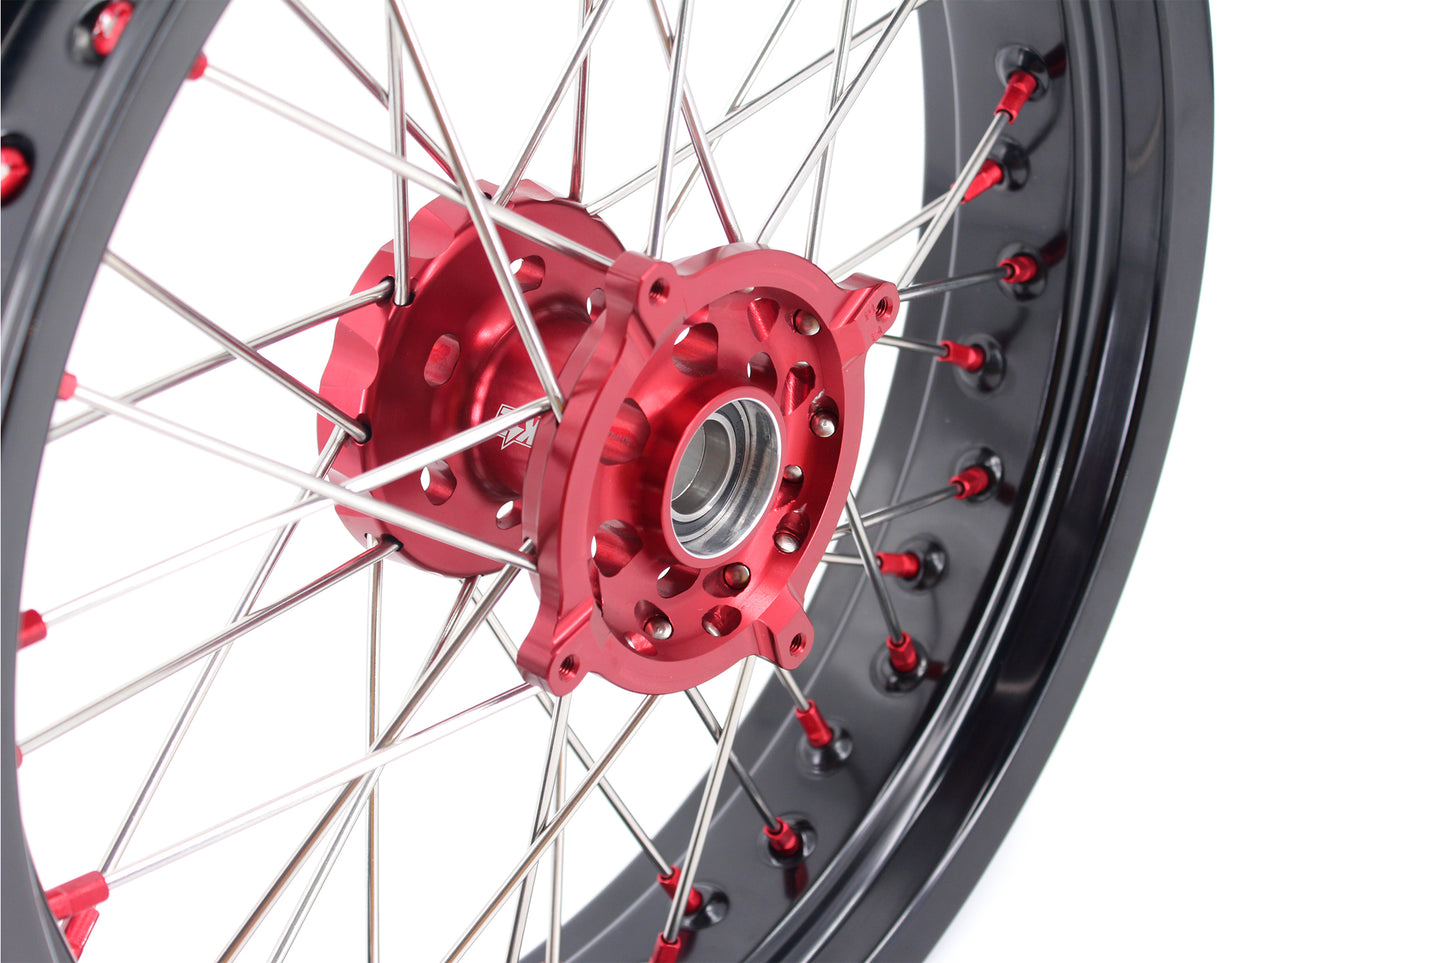 KKE 3.5 & 4.25 Supermoto Wheels Fit Husqvarna TE TC FE FC SMR 2000-2013 Red